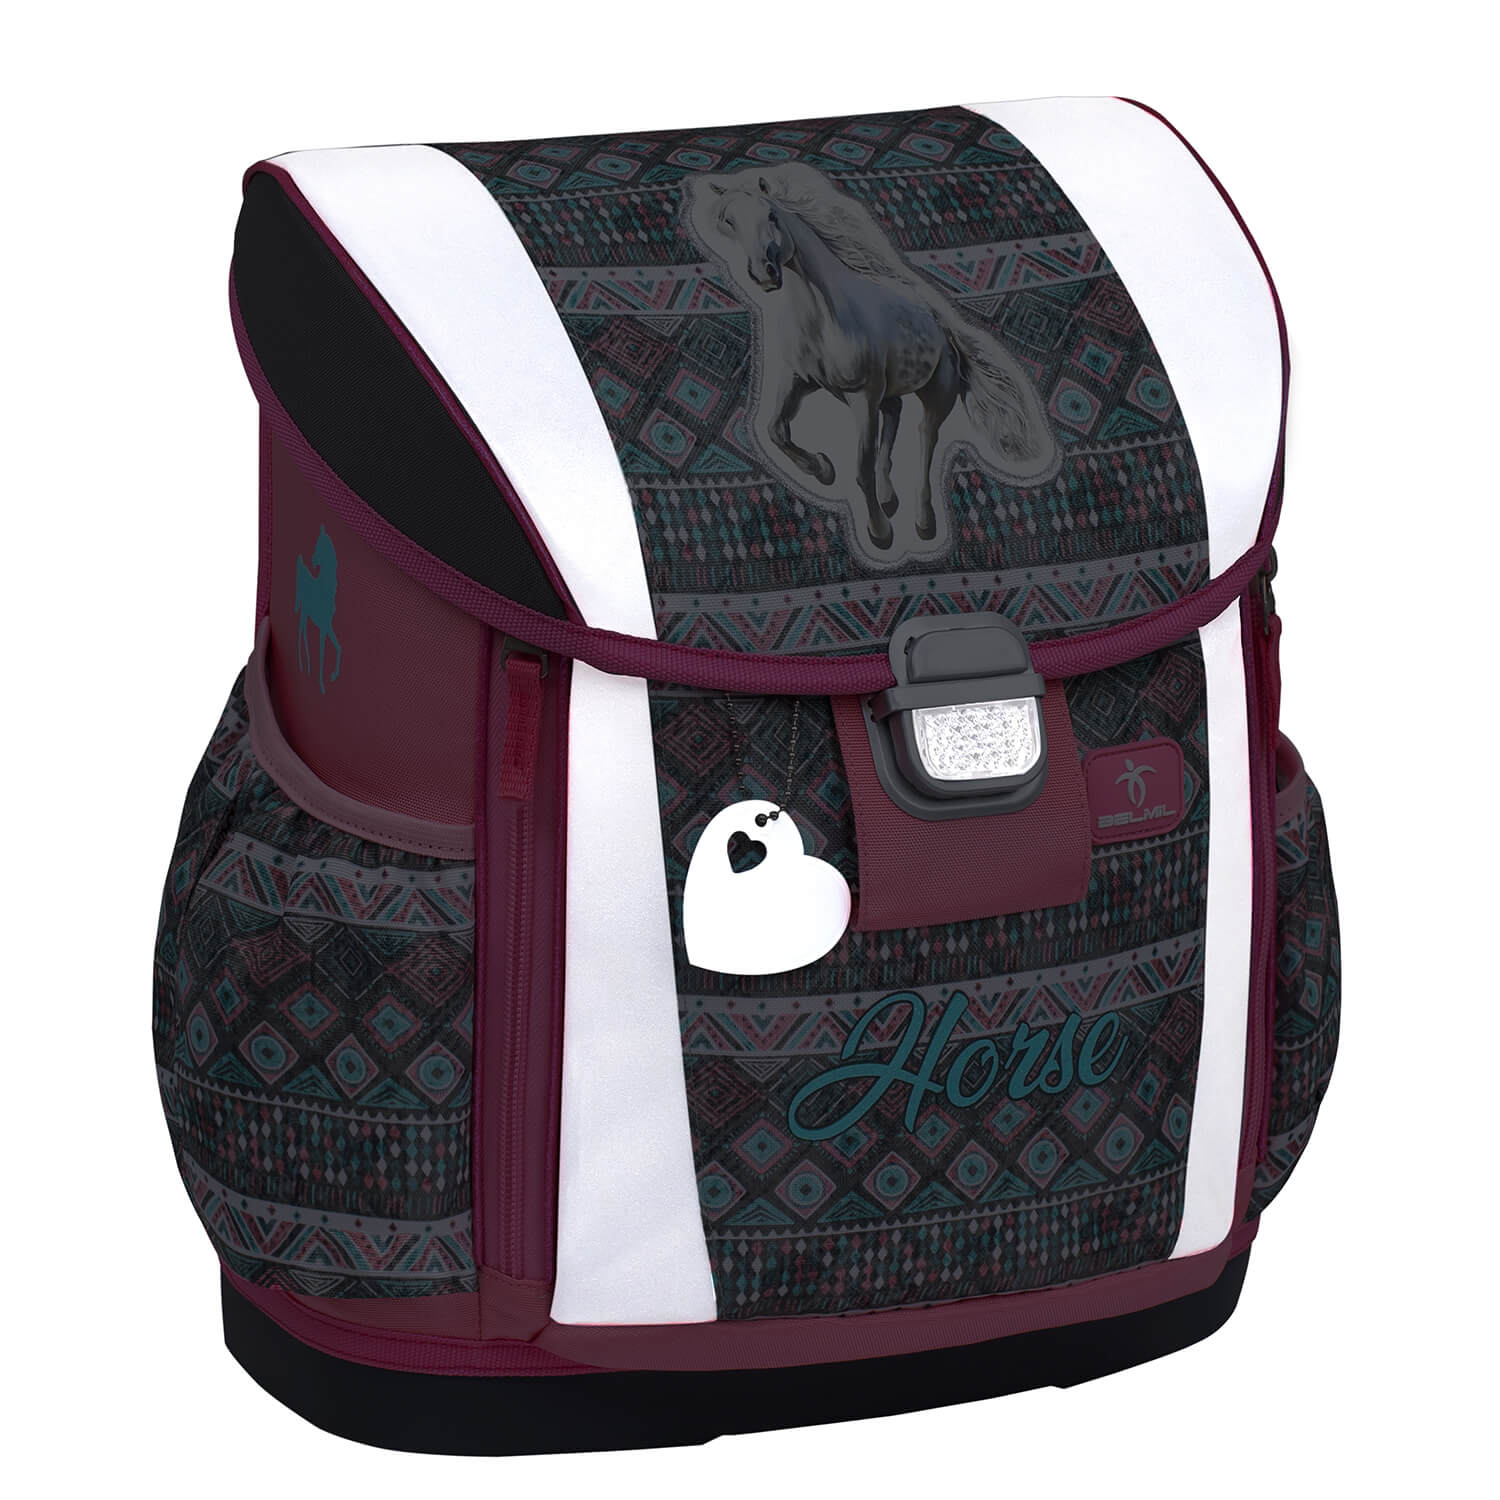 Customize Me Horse Aruba Blue schoolbag set 4 pcs